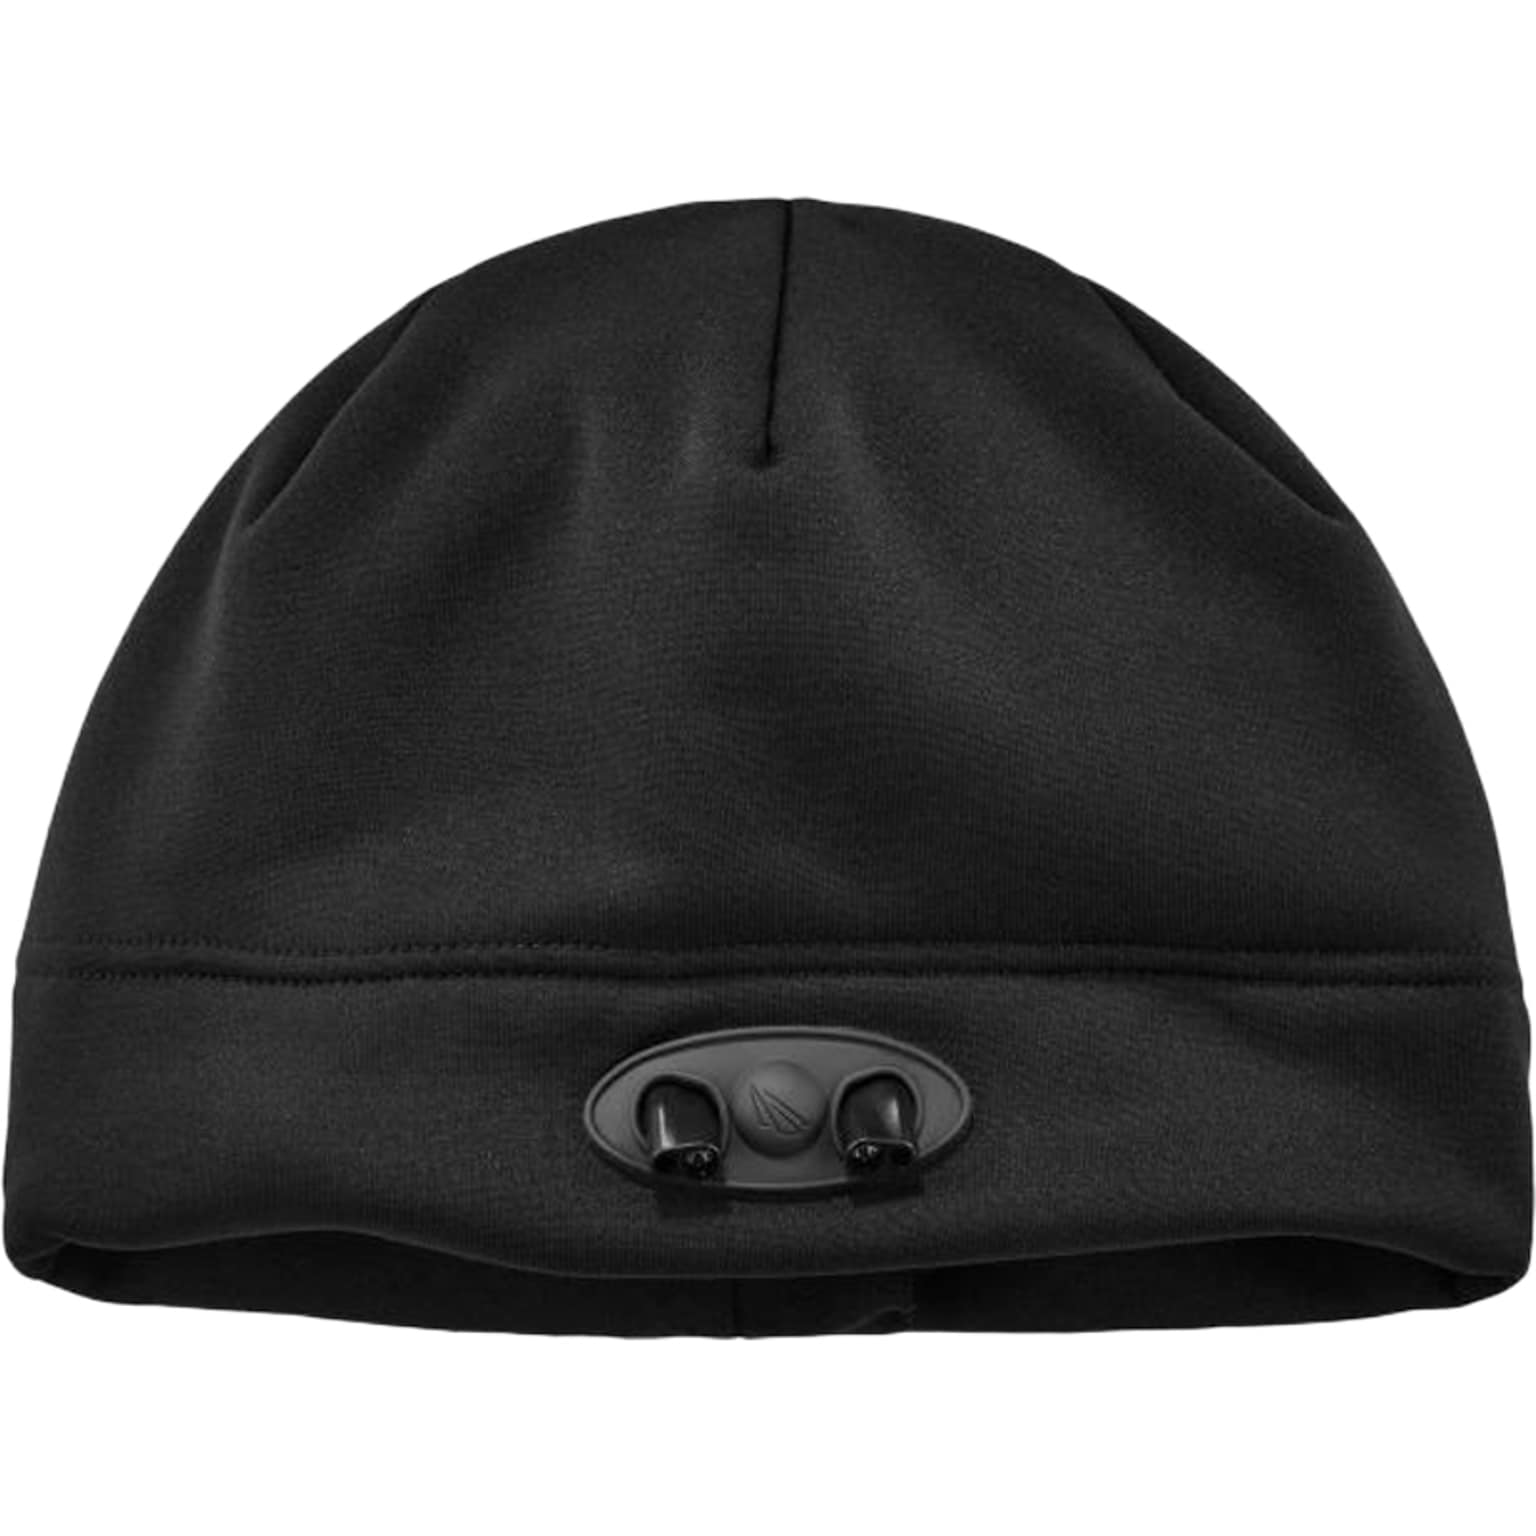 Ergodyne N-Ferno One Size Fits All Skull Cap Beanie Hat with LED Lights, Black (16803)